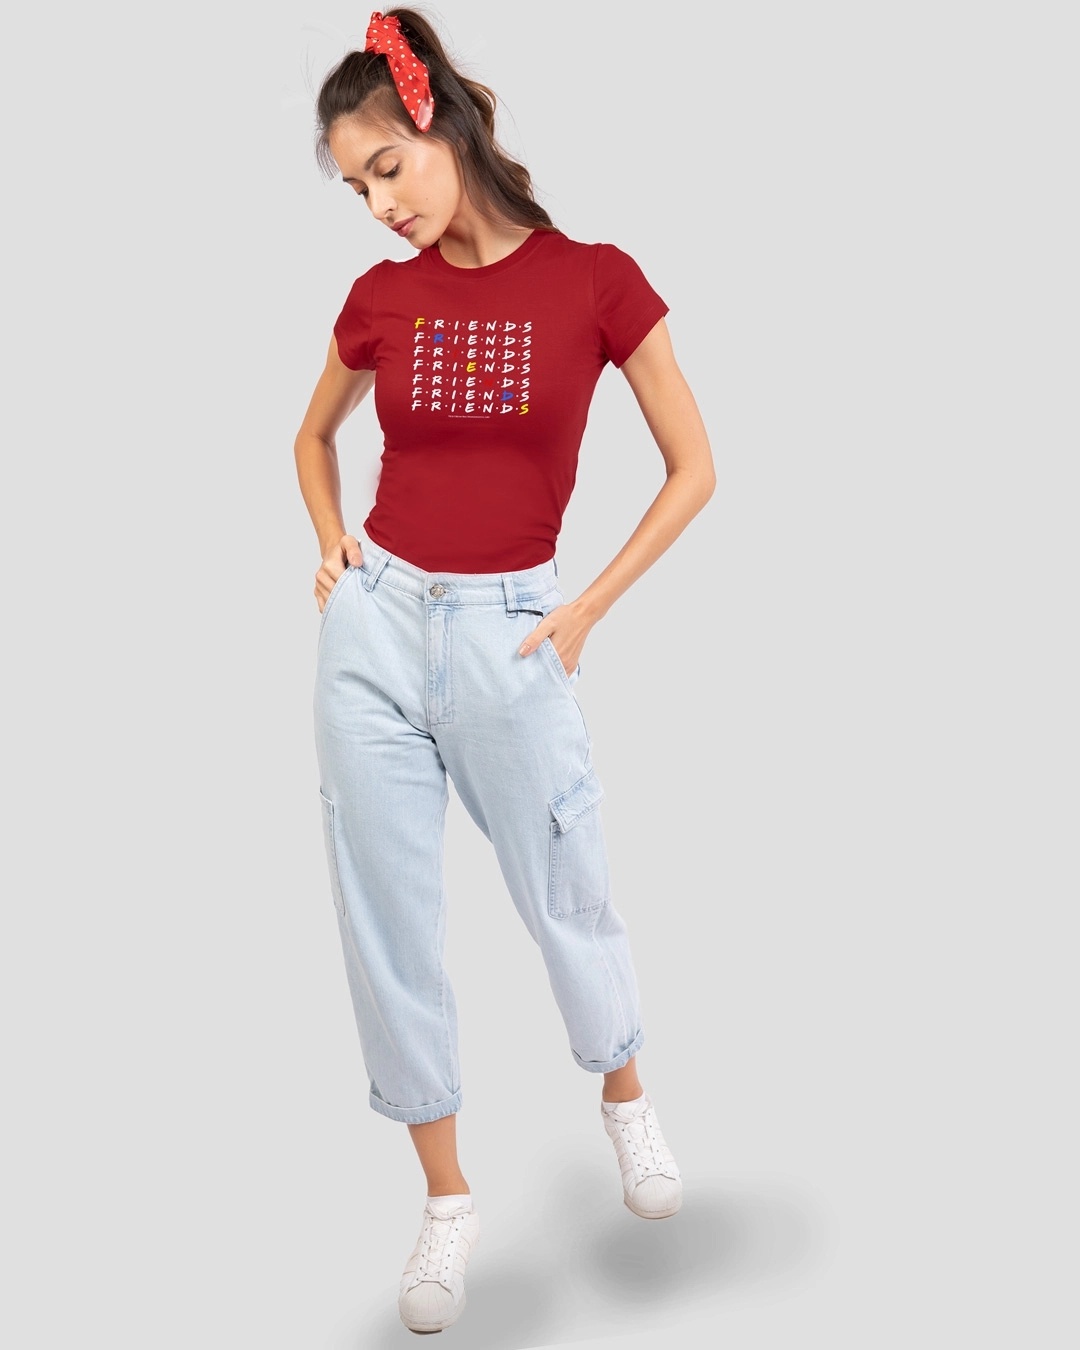 Shop Women's Red Diagonal Friends (FRL) Printed T-shirt-Design